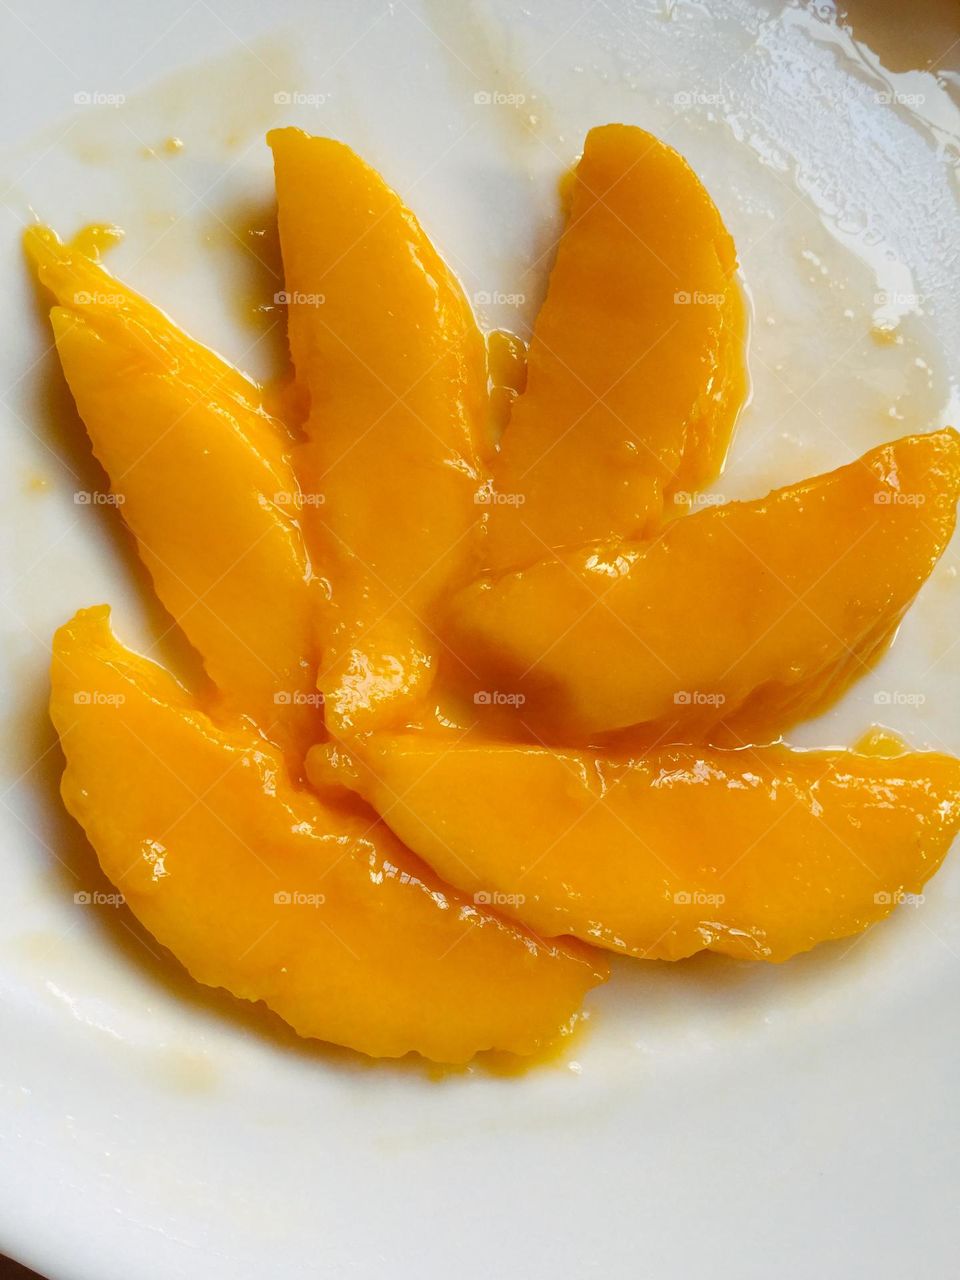 Ripe mango slices